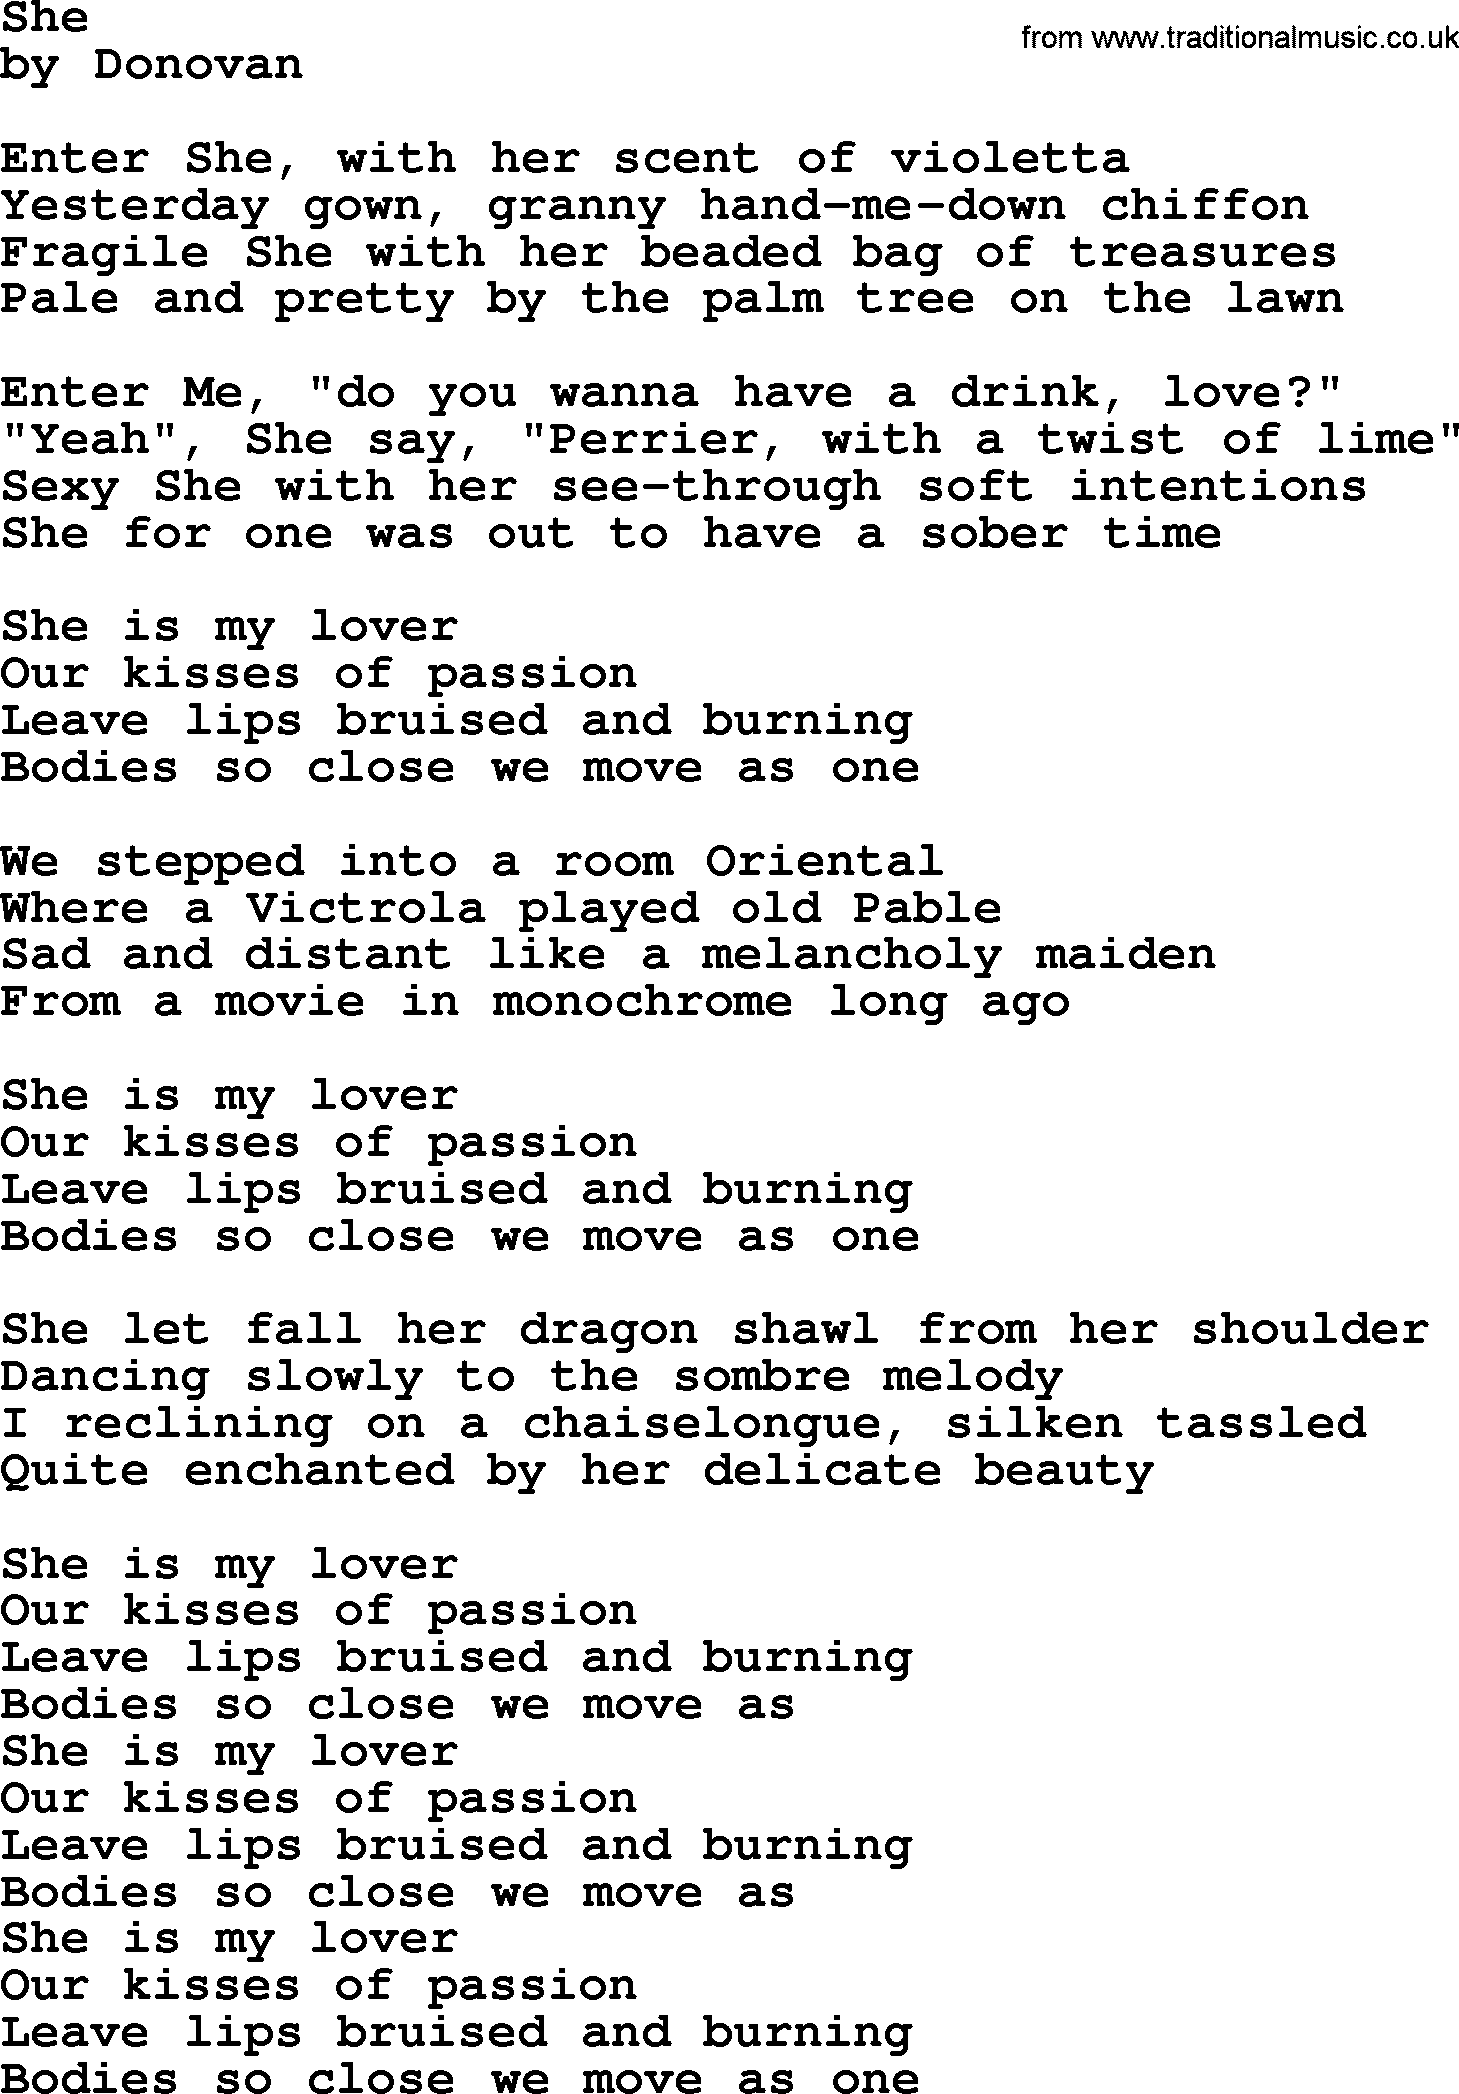 Donovan Leitch song: She lyrics